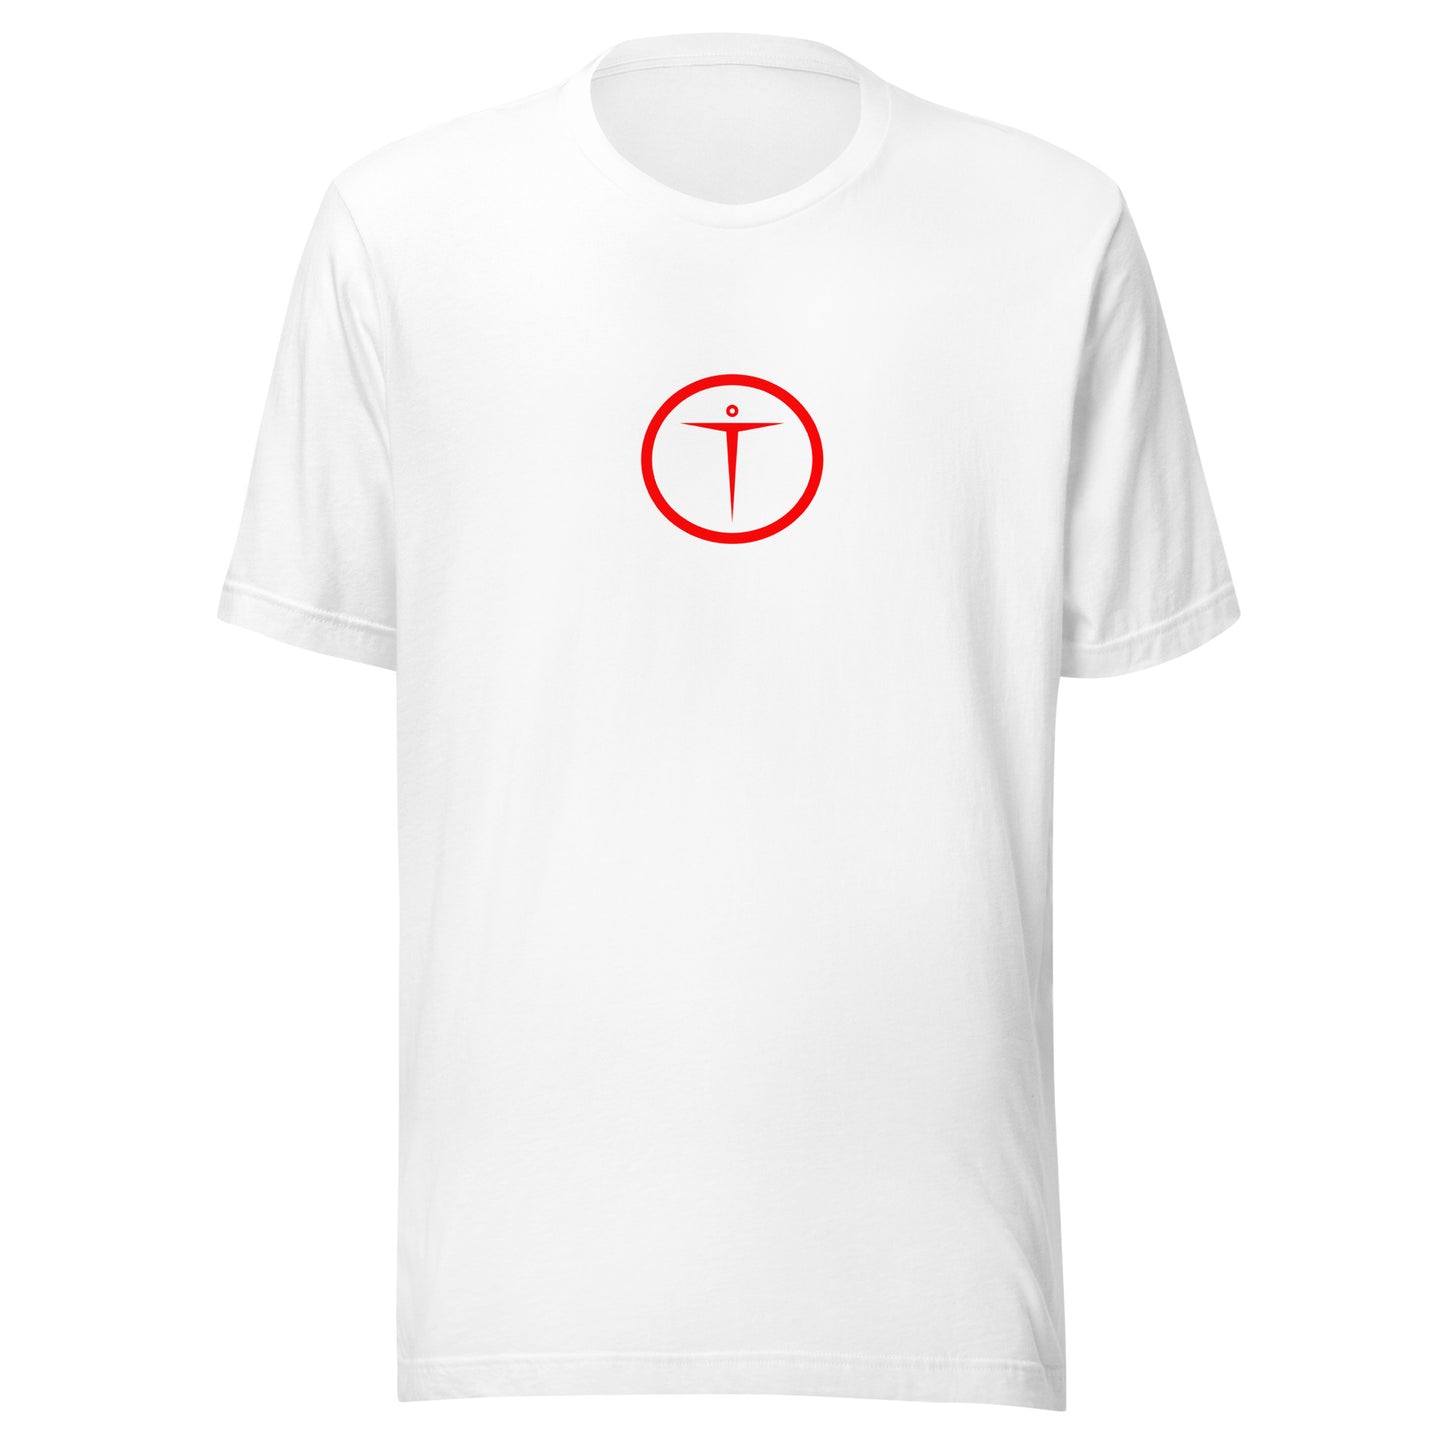 TORAYON (R) Unisex t-shirt